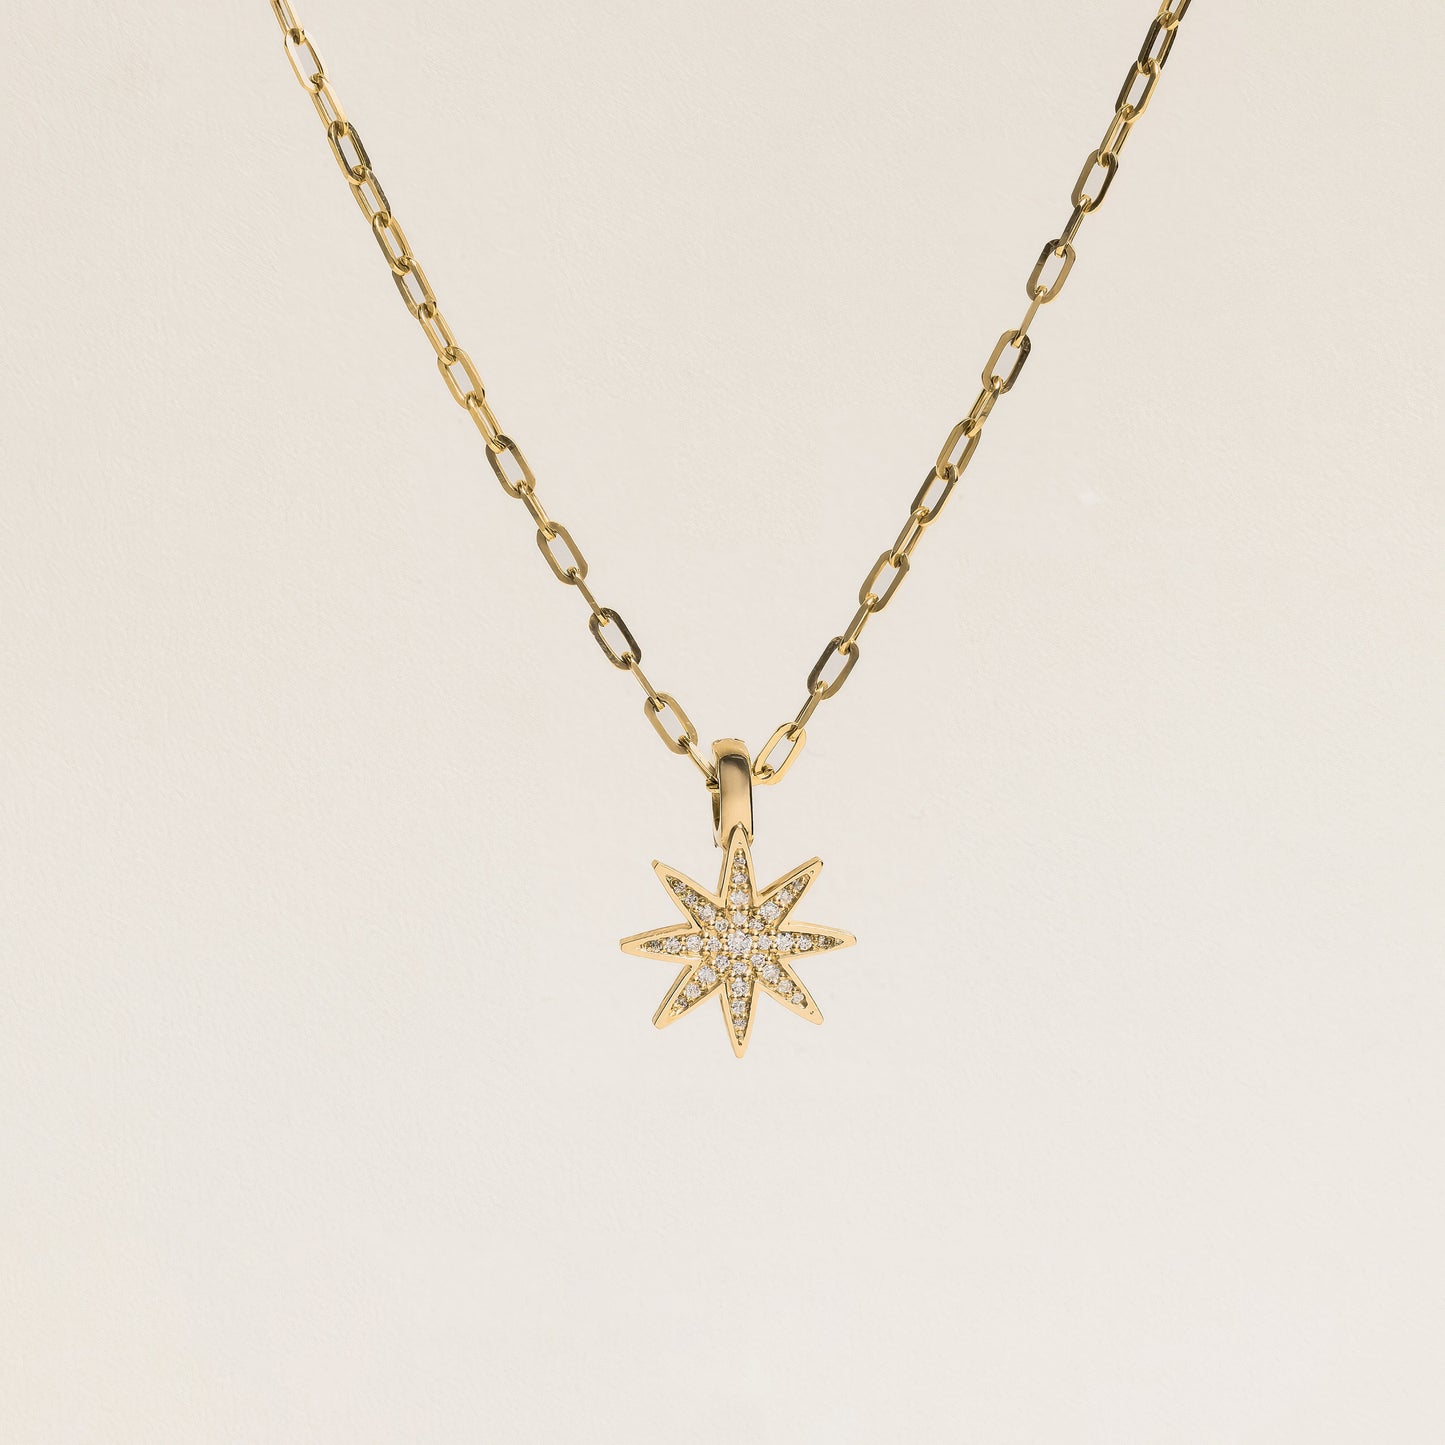 Star Charm for Bracelets & Necklaces